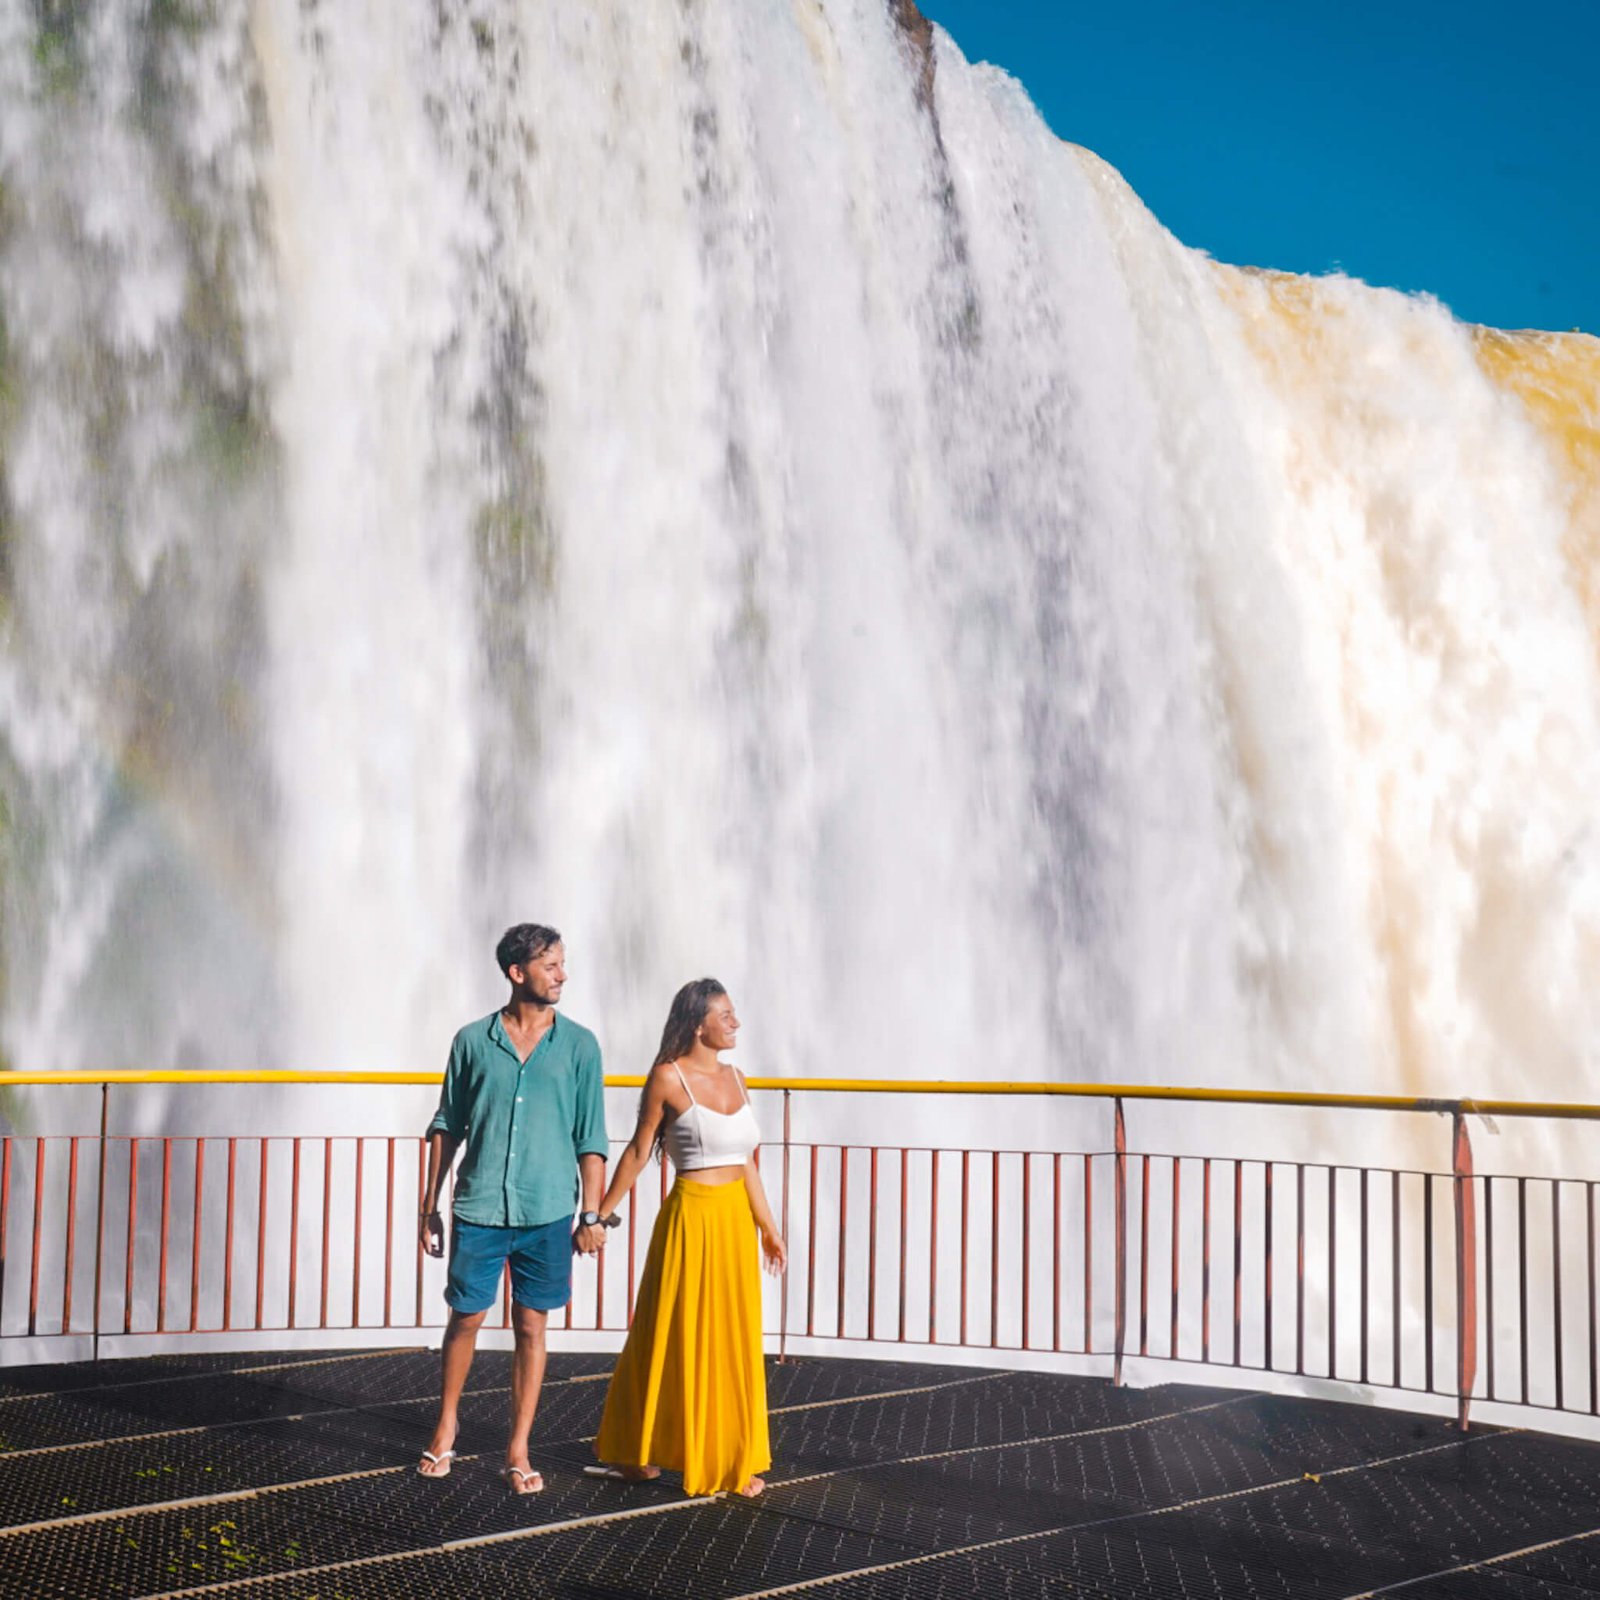 Brazil side of Iguazu Falls final platform